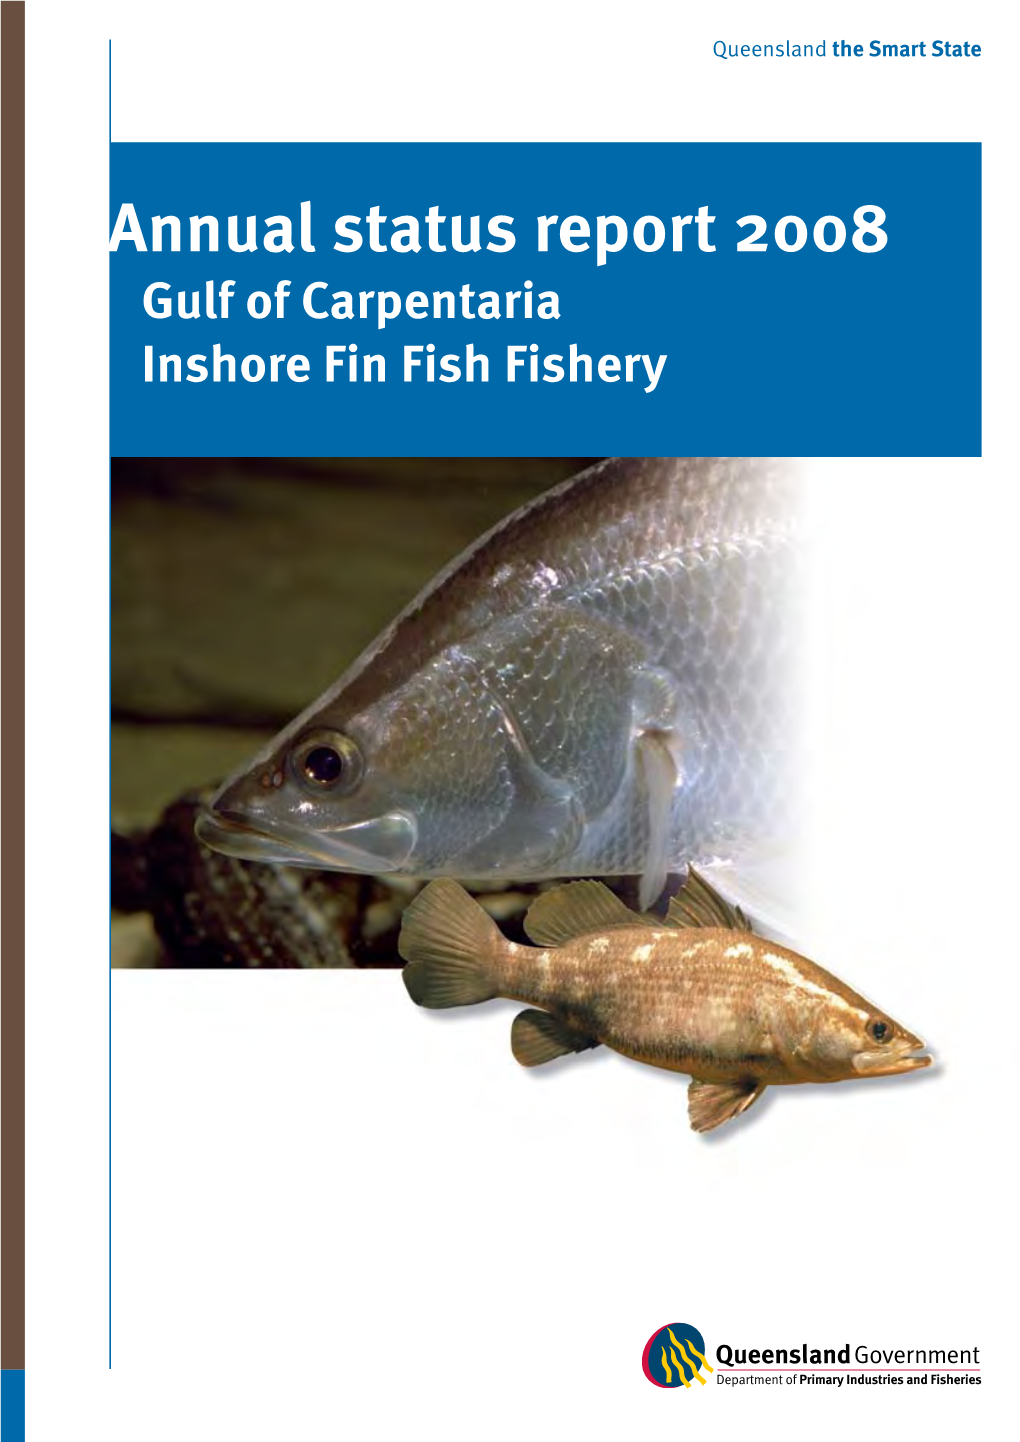 Annual Status Report for the Gulf of Carpentaria Inshore Fin Fish Fishery